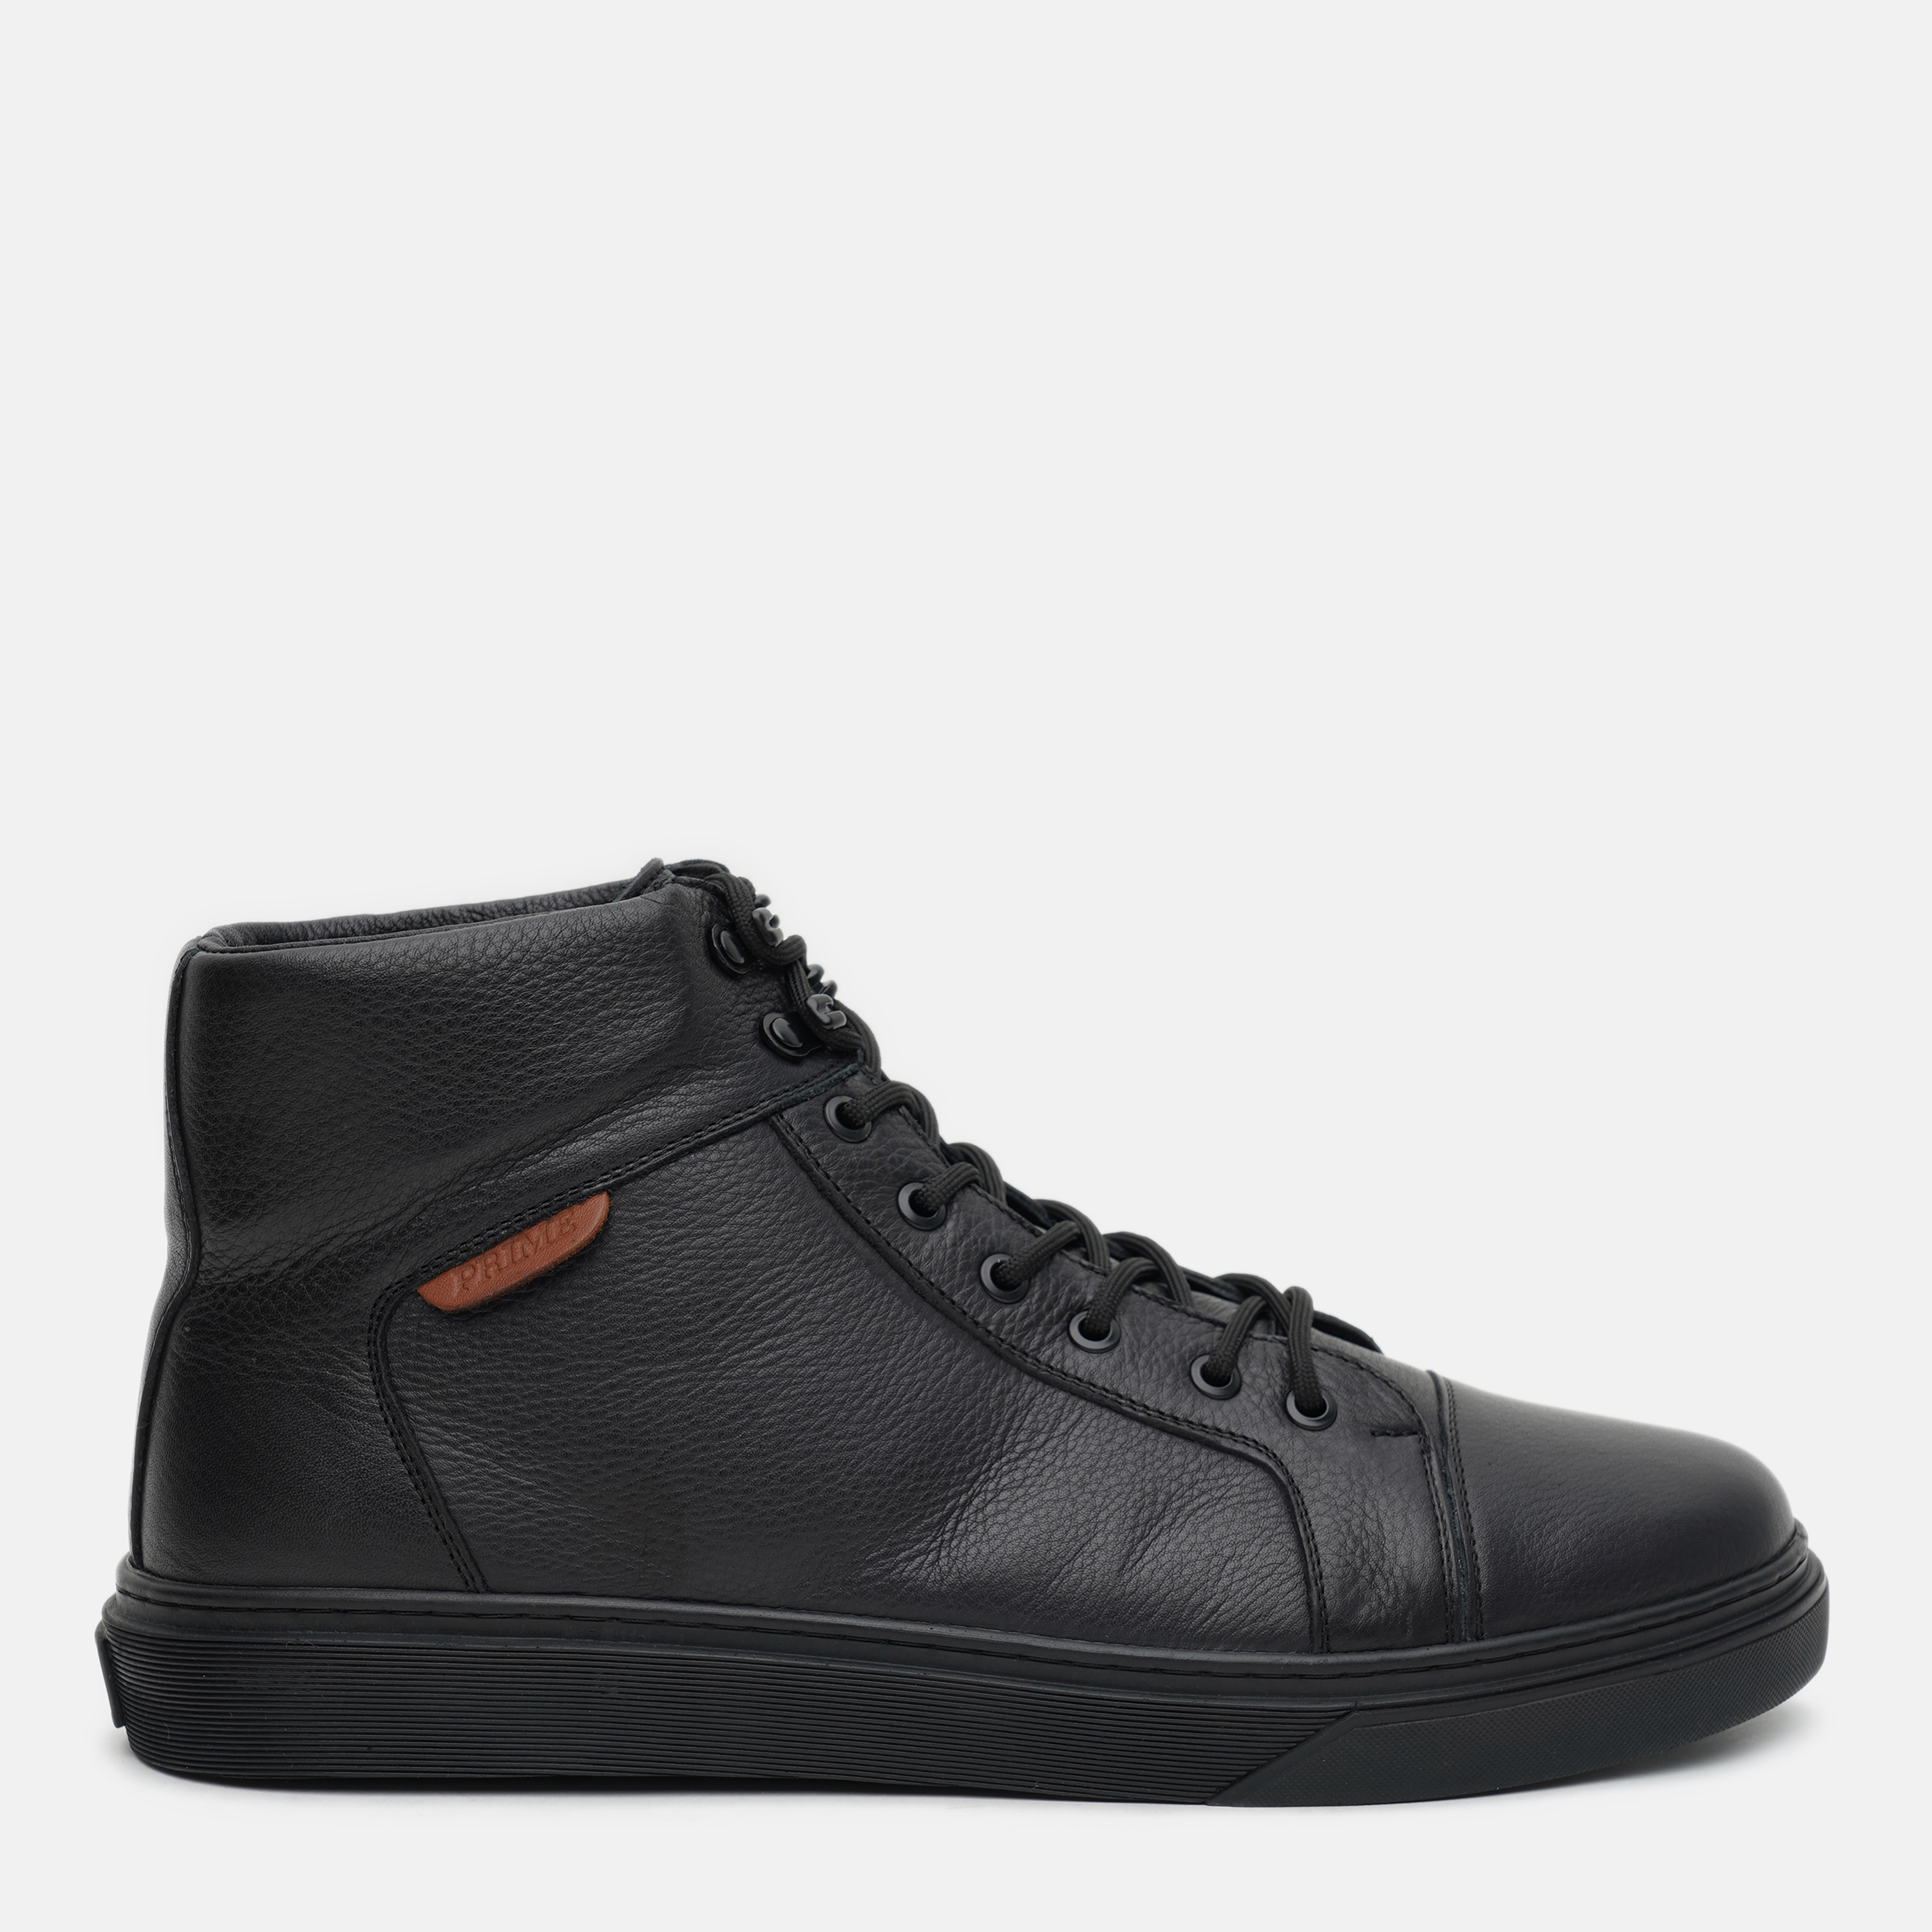 Ботинки Prime Shoes 660 Black Leather 16-660-30111 40 26.5 см Черные (PS_2000000029276)